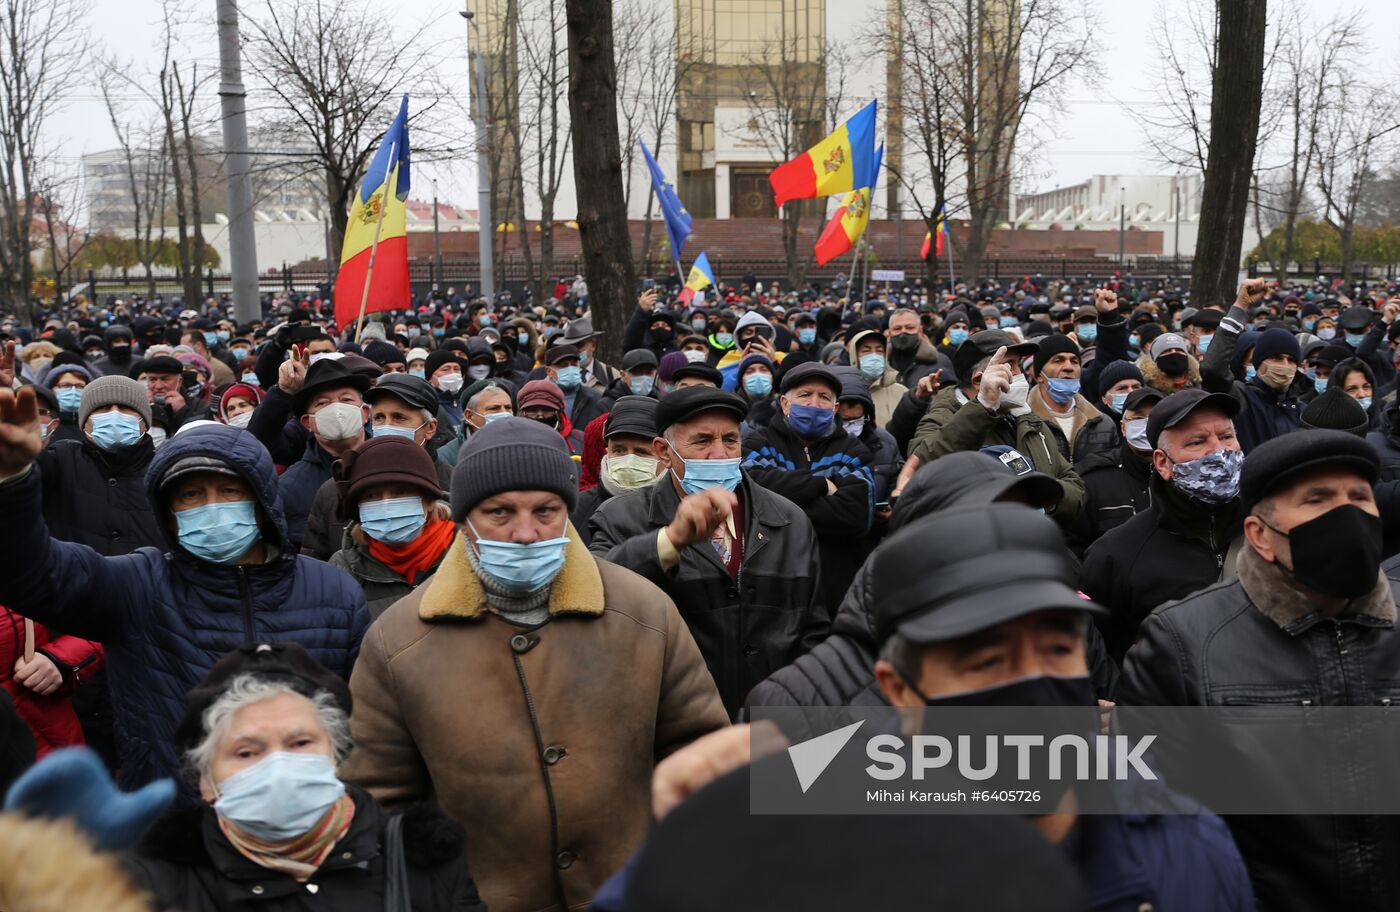 Moldova Sandu Supporters Rally